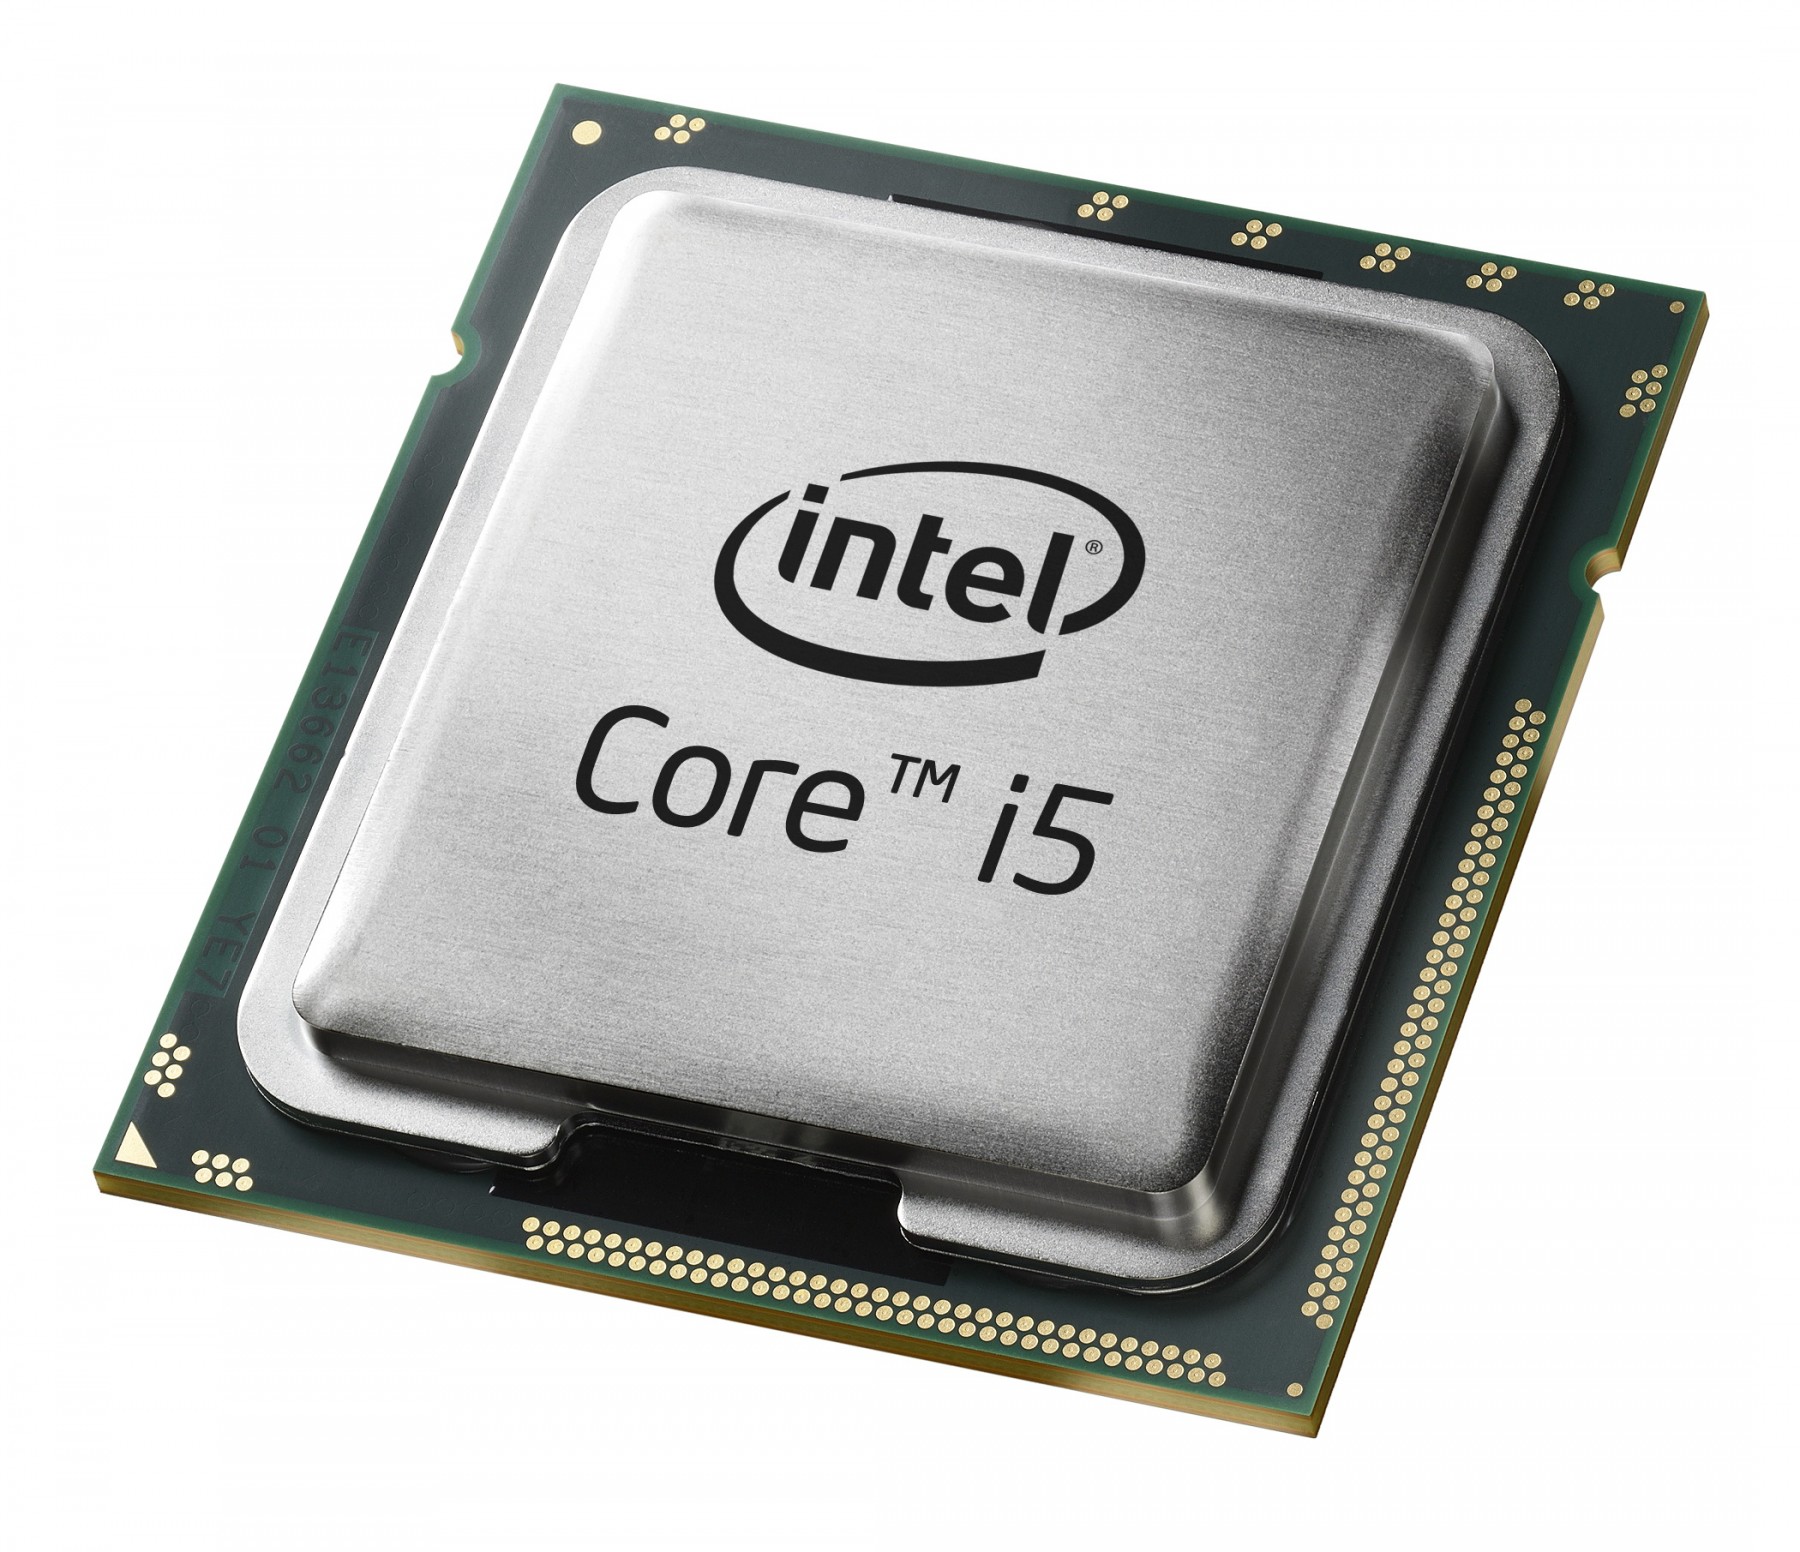 500030168-Intel Core i5-3380M SR0X9 2.9Ghz 5GT/s BGA 1023 Processor-image